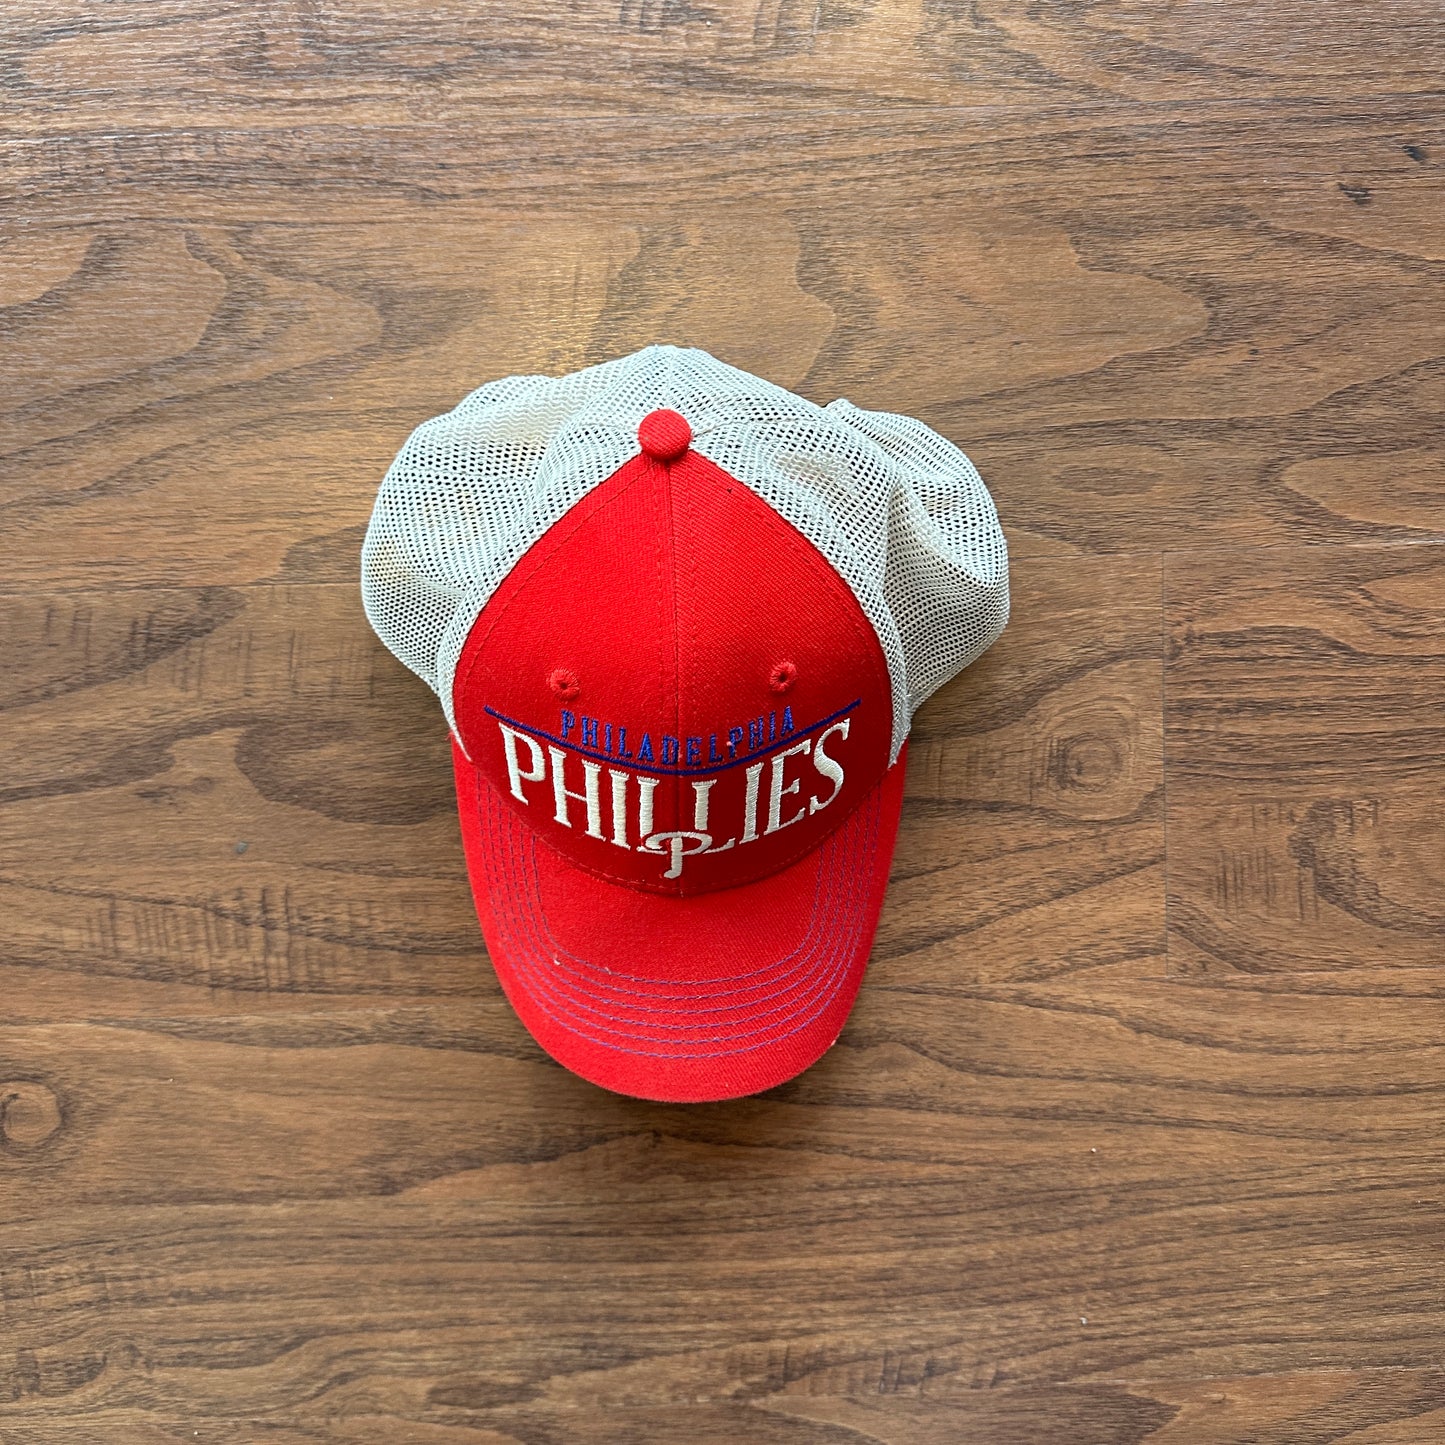 Phillies Red/White Net Trucker Hat